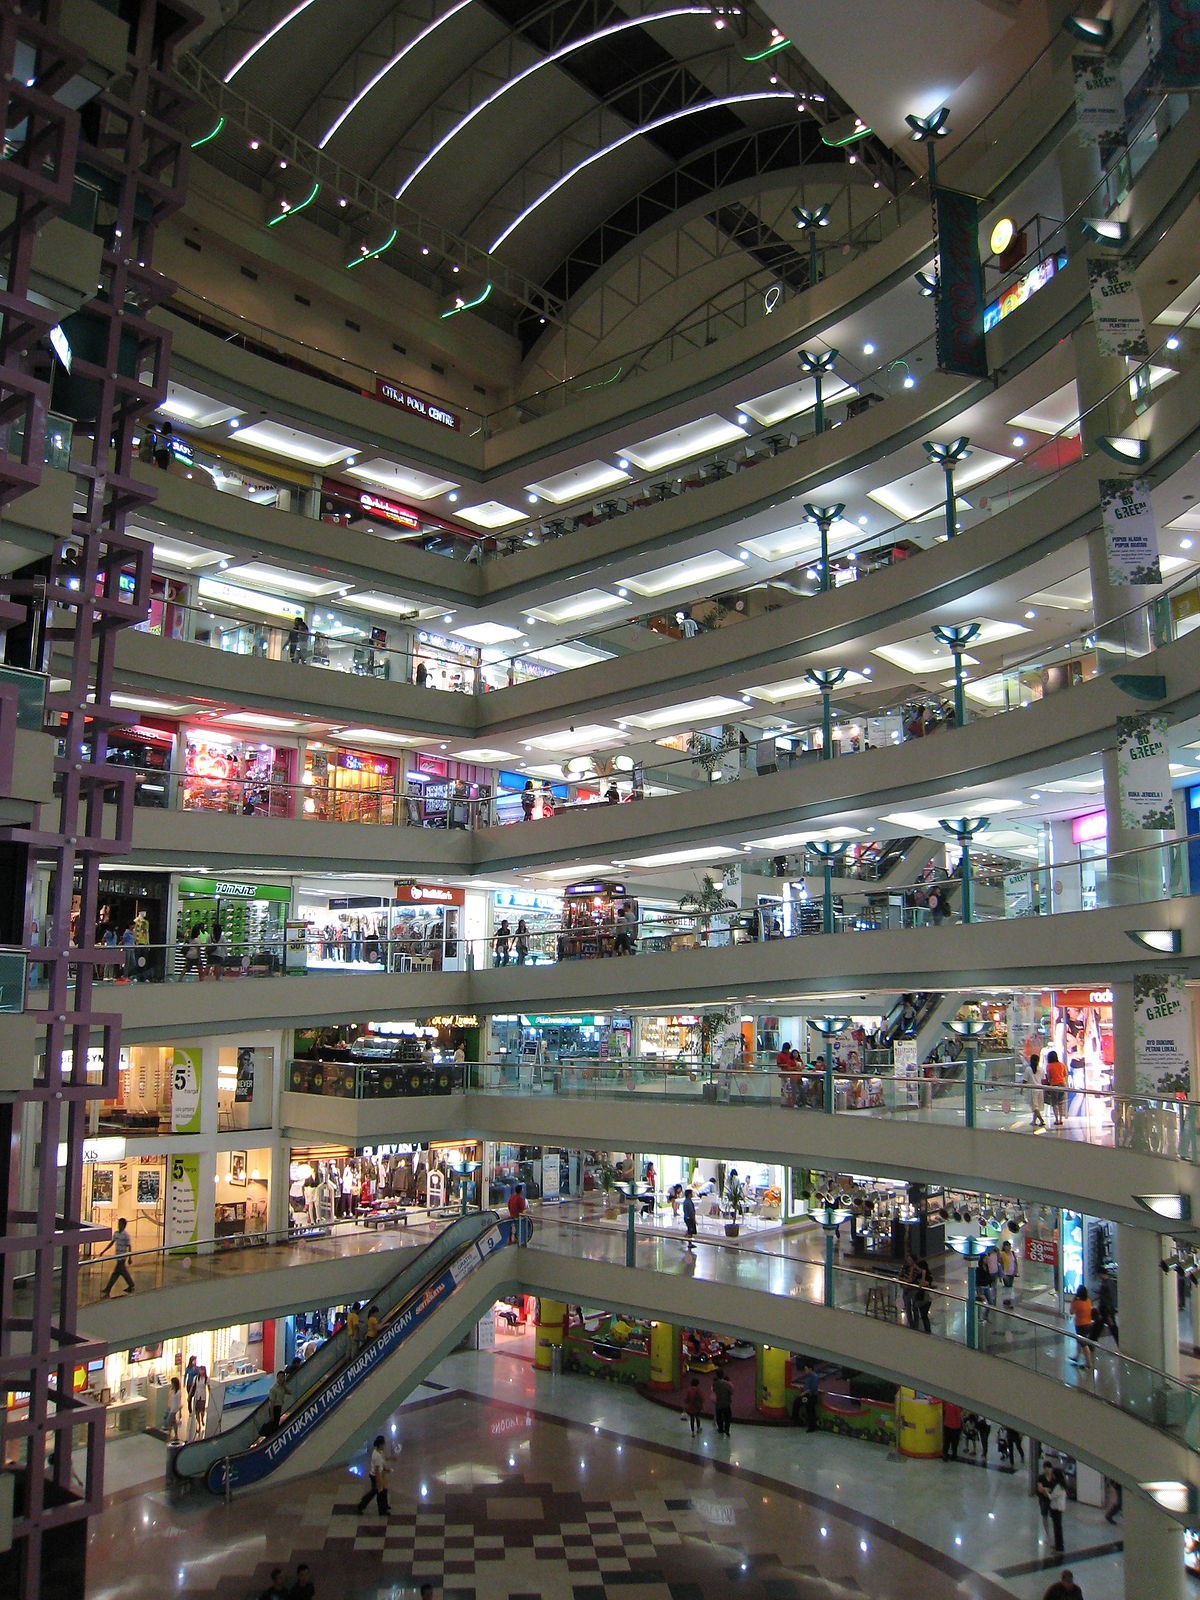 Mall Ciputra Jakarta